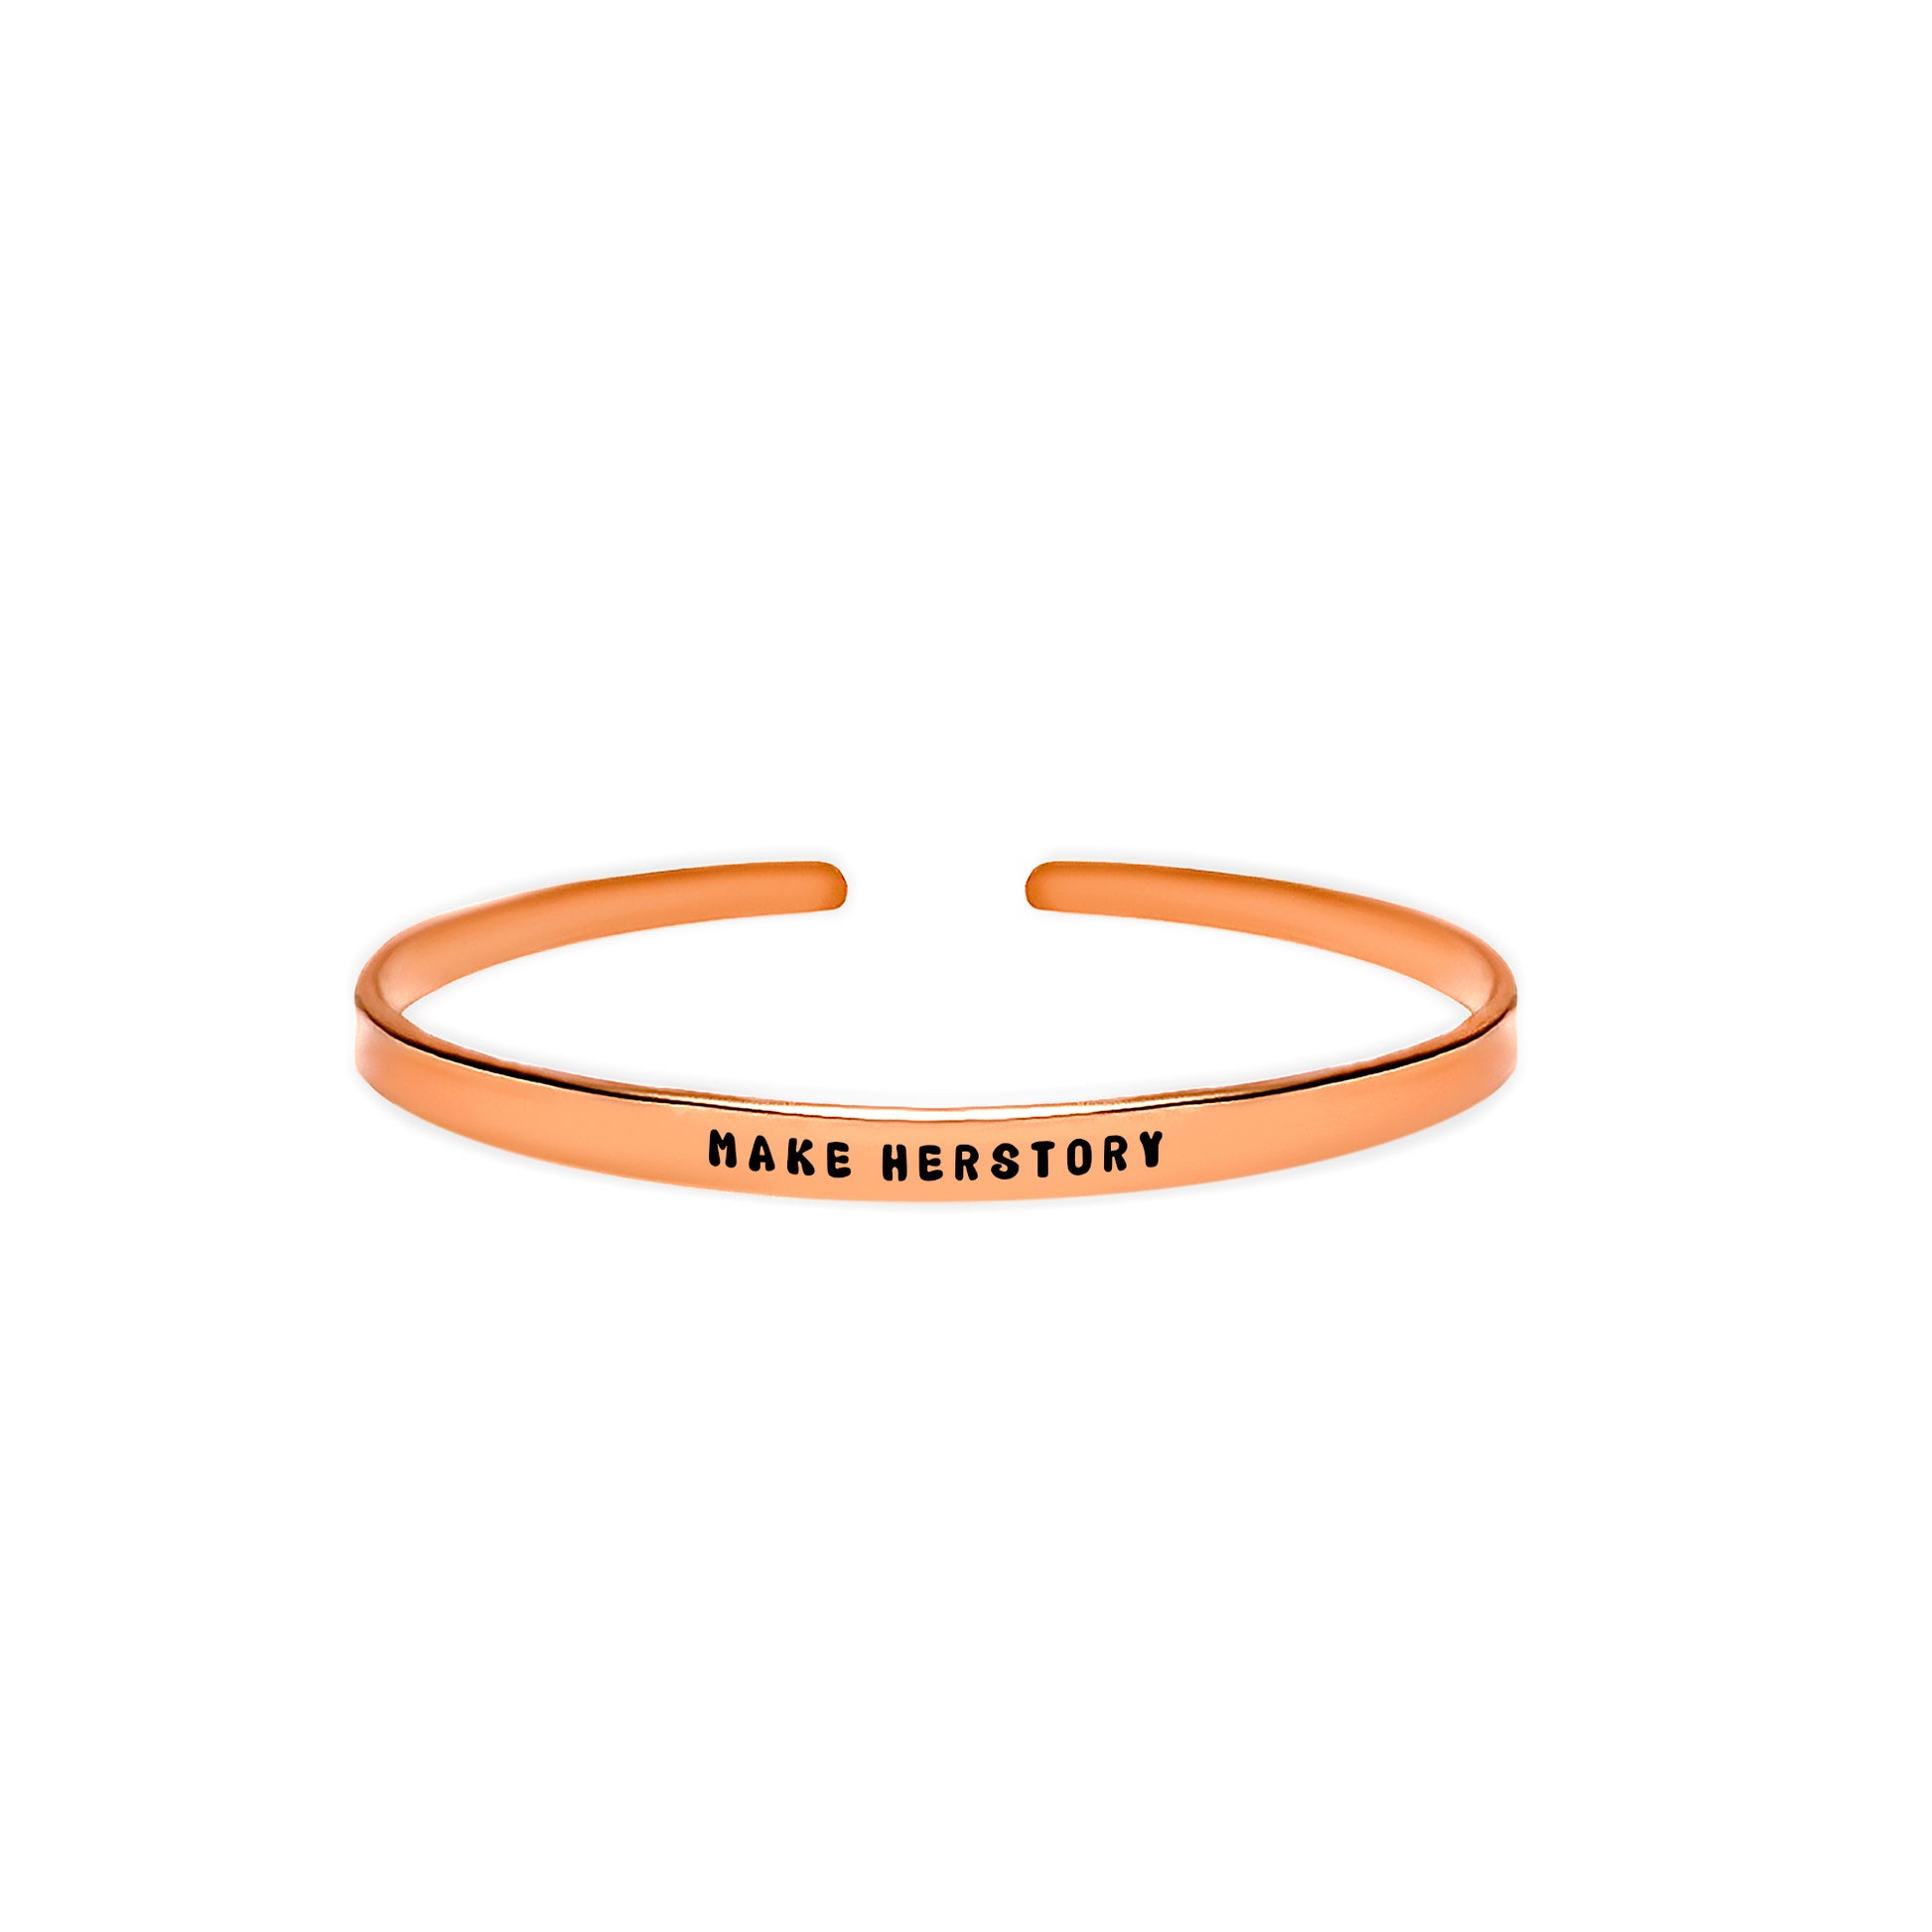 ‘Make herstory’ successful women making history quote cuff bracelet